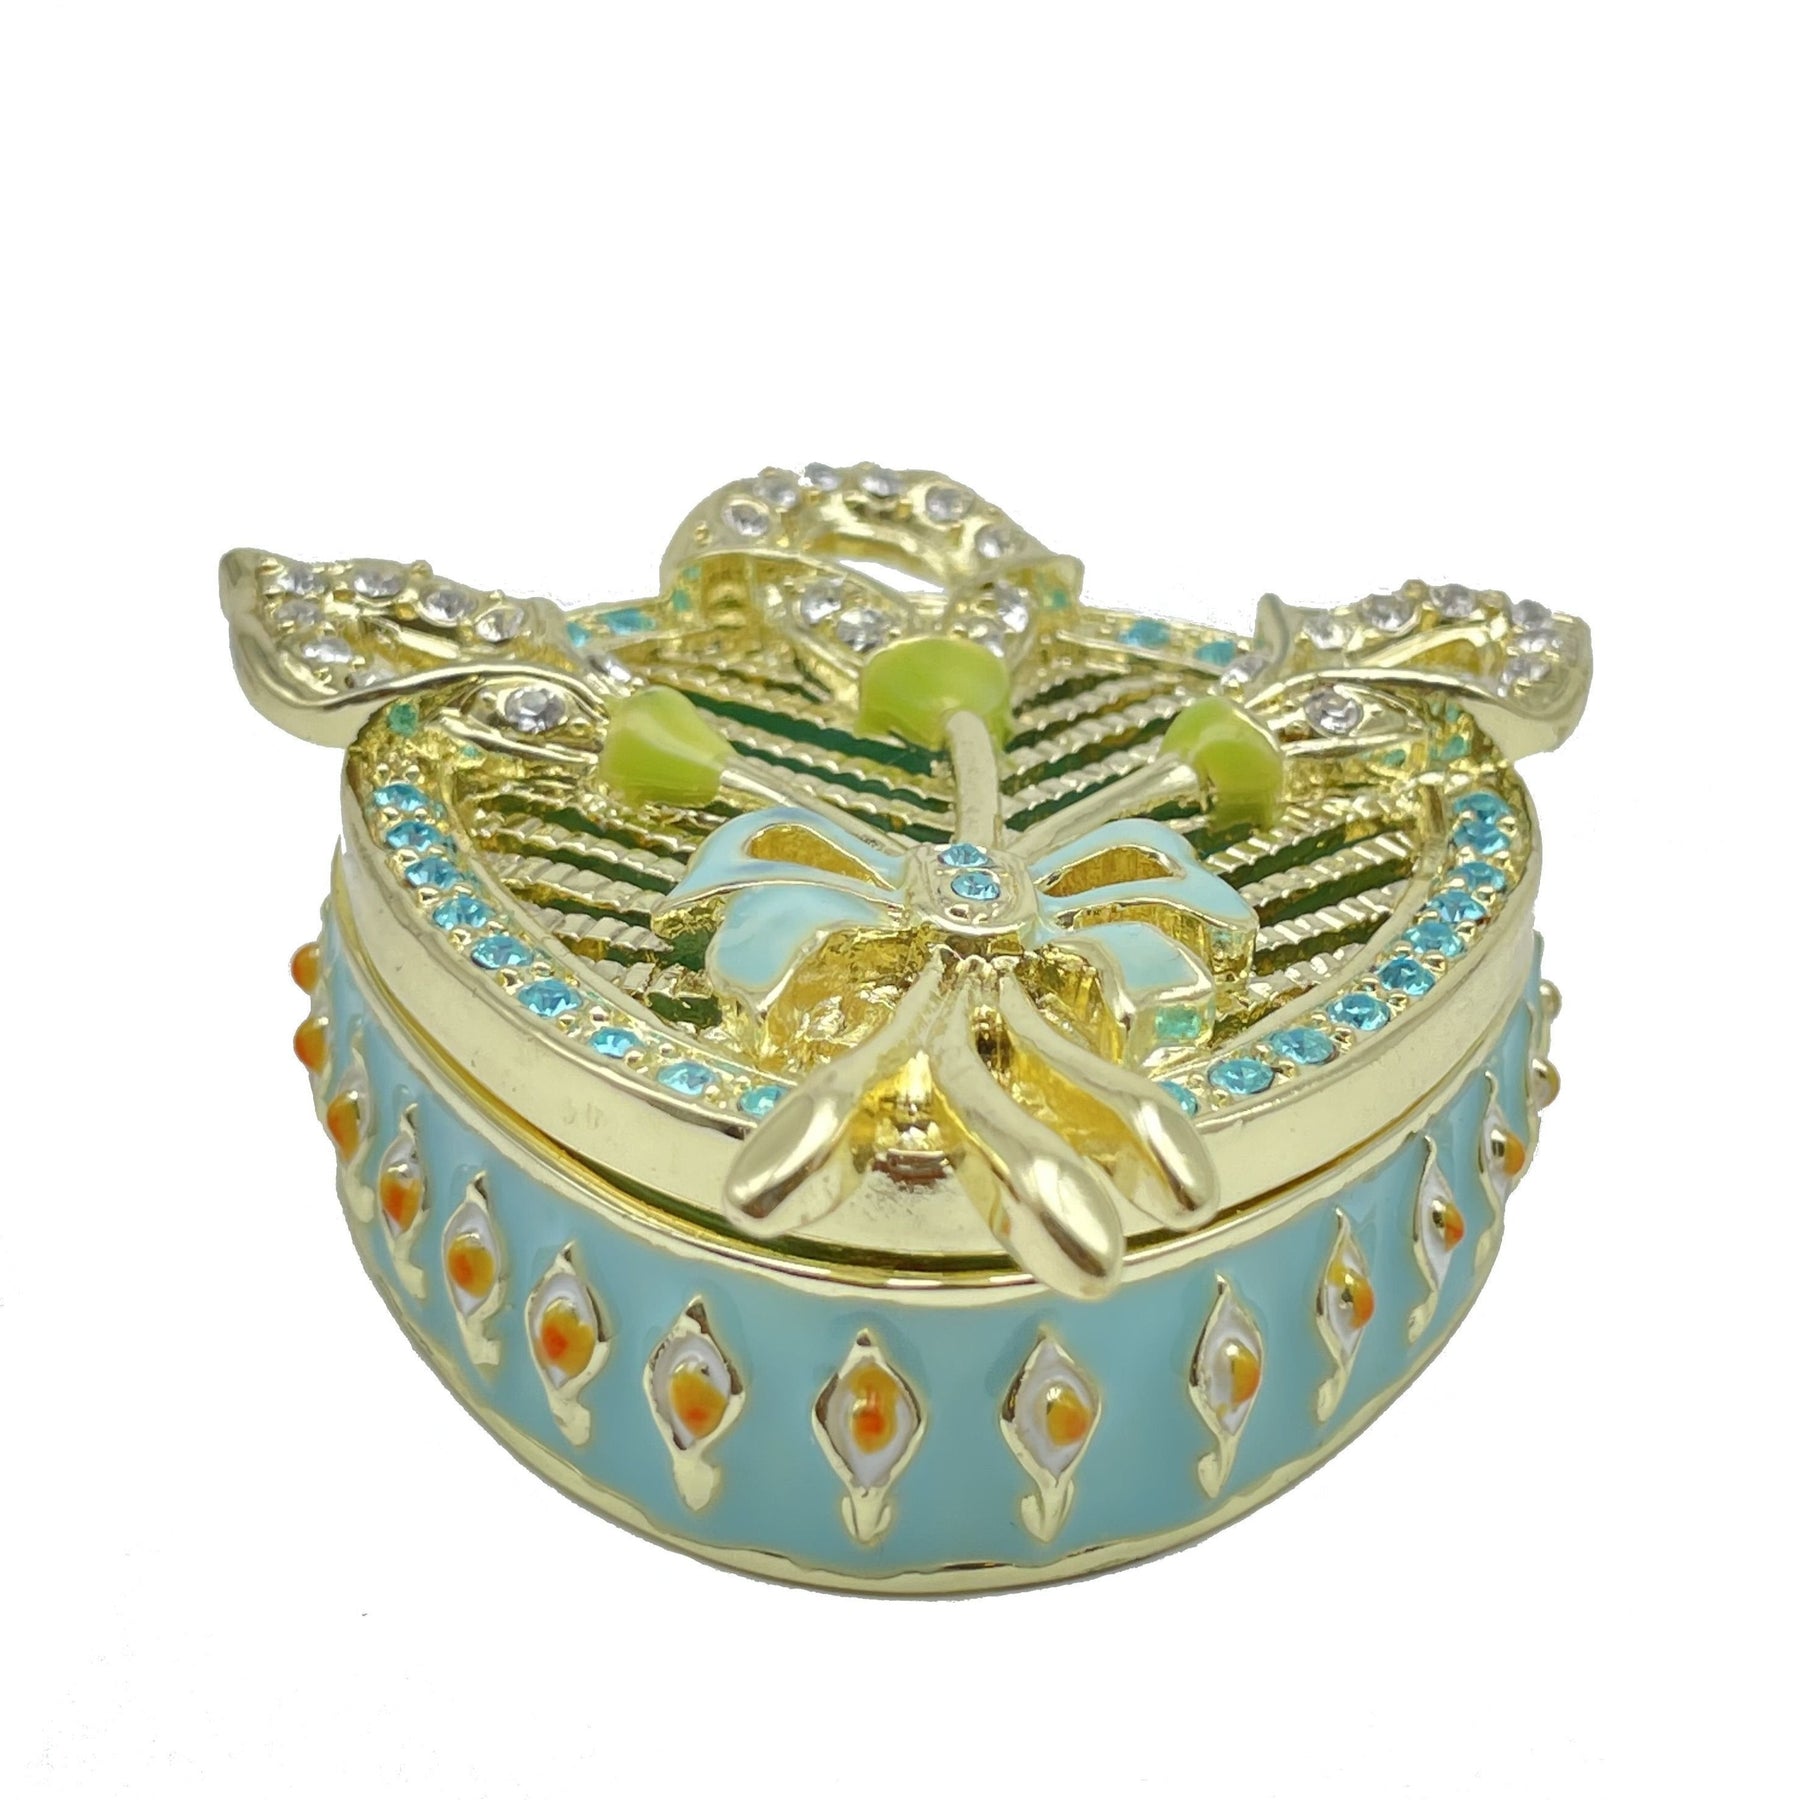 Copy of Beautiful Decorated Trinket Box trinket box Keren Kopal